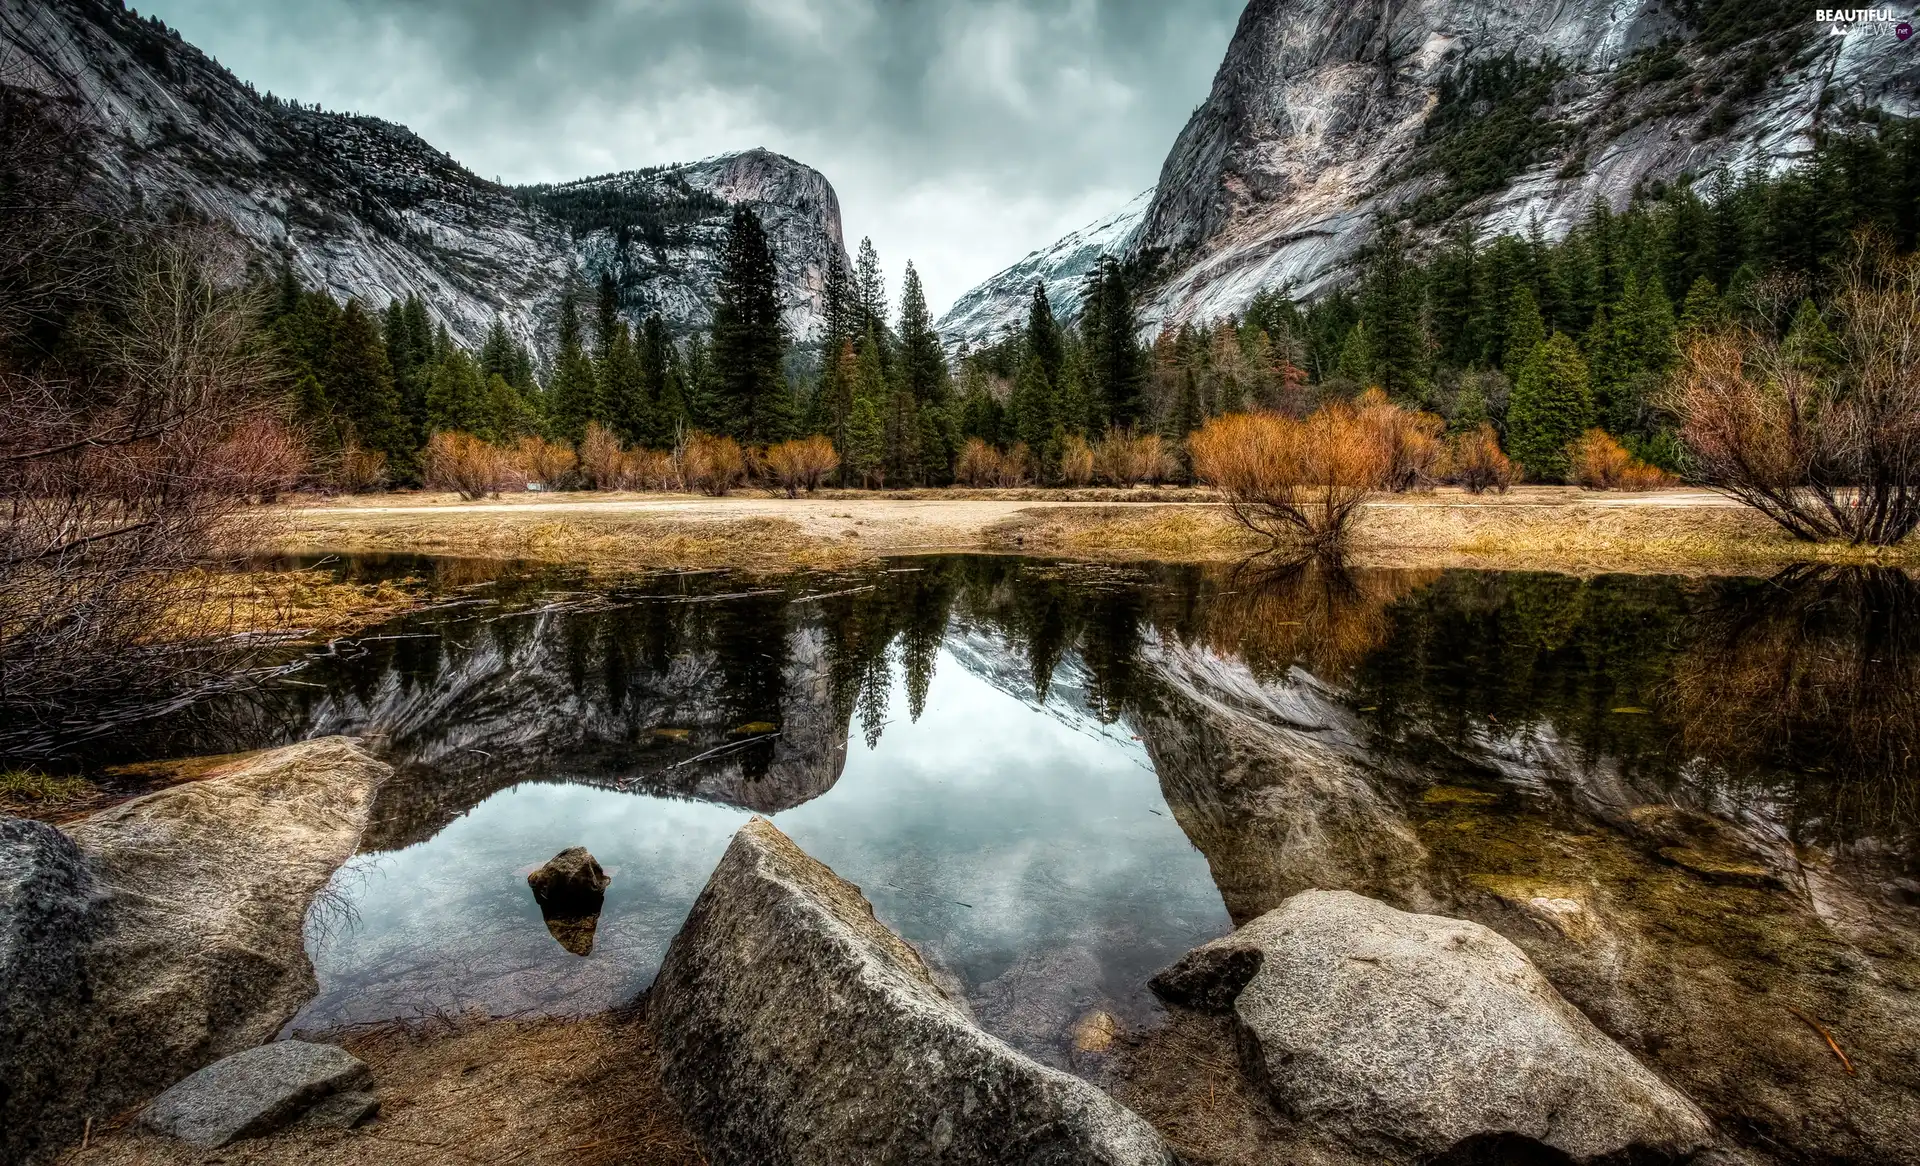 State of California, The United States, Yosemite National Park, Mountains, viewes, Mirror Lake, rocks, trees, Half Dome Peak